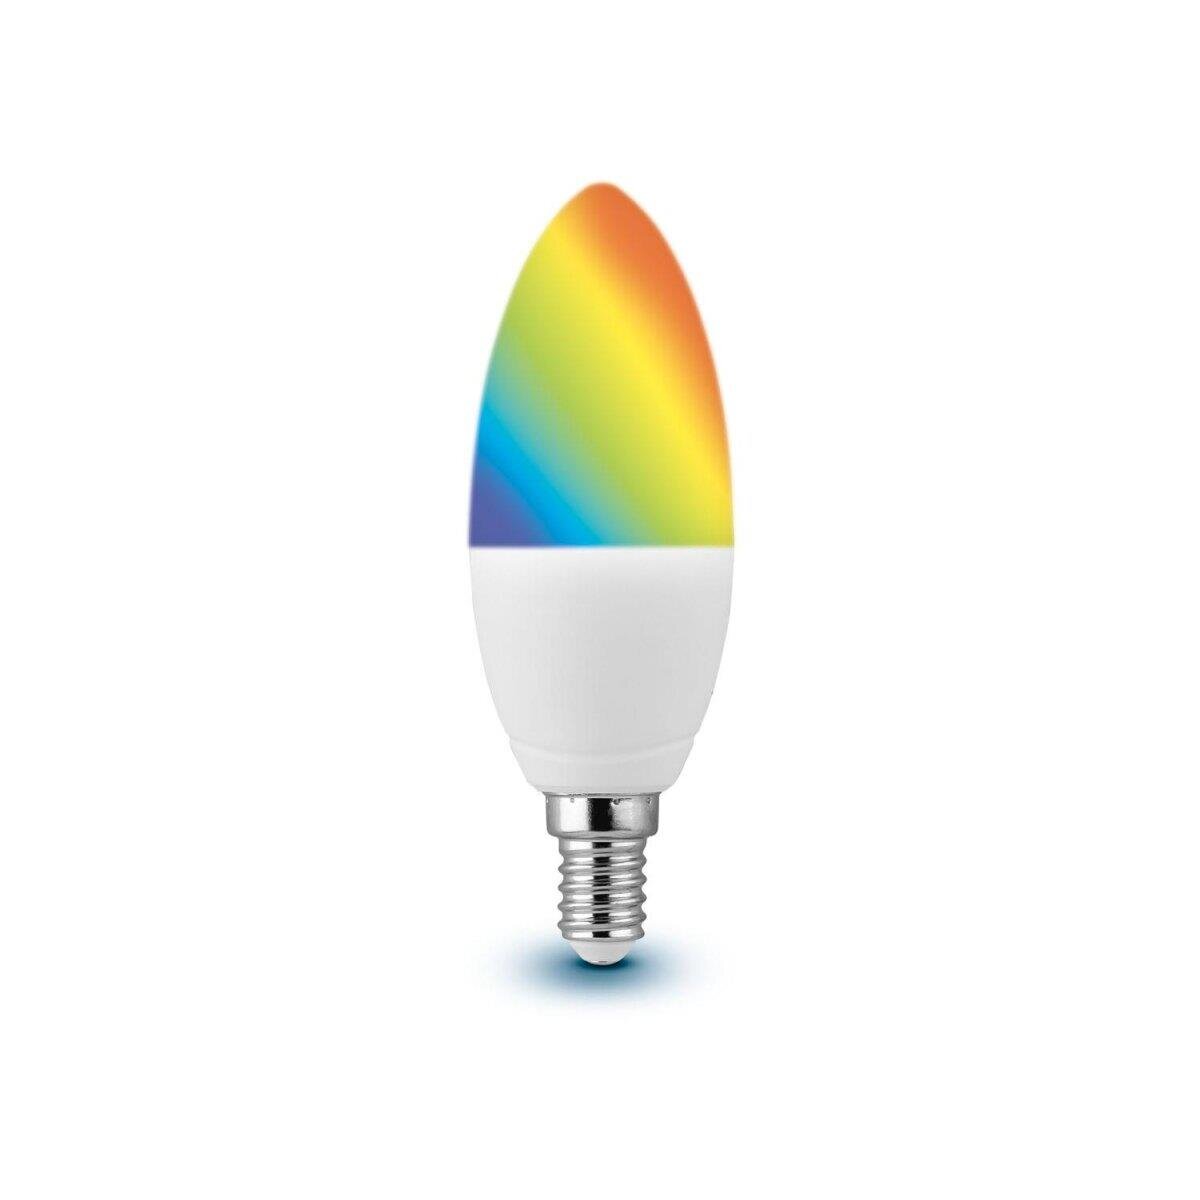 € LED Glühbirne neuwertig, Zigbee home 8,49 B-Ware Kerzenform Livarno Home, RGB - Smart